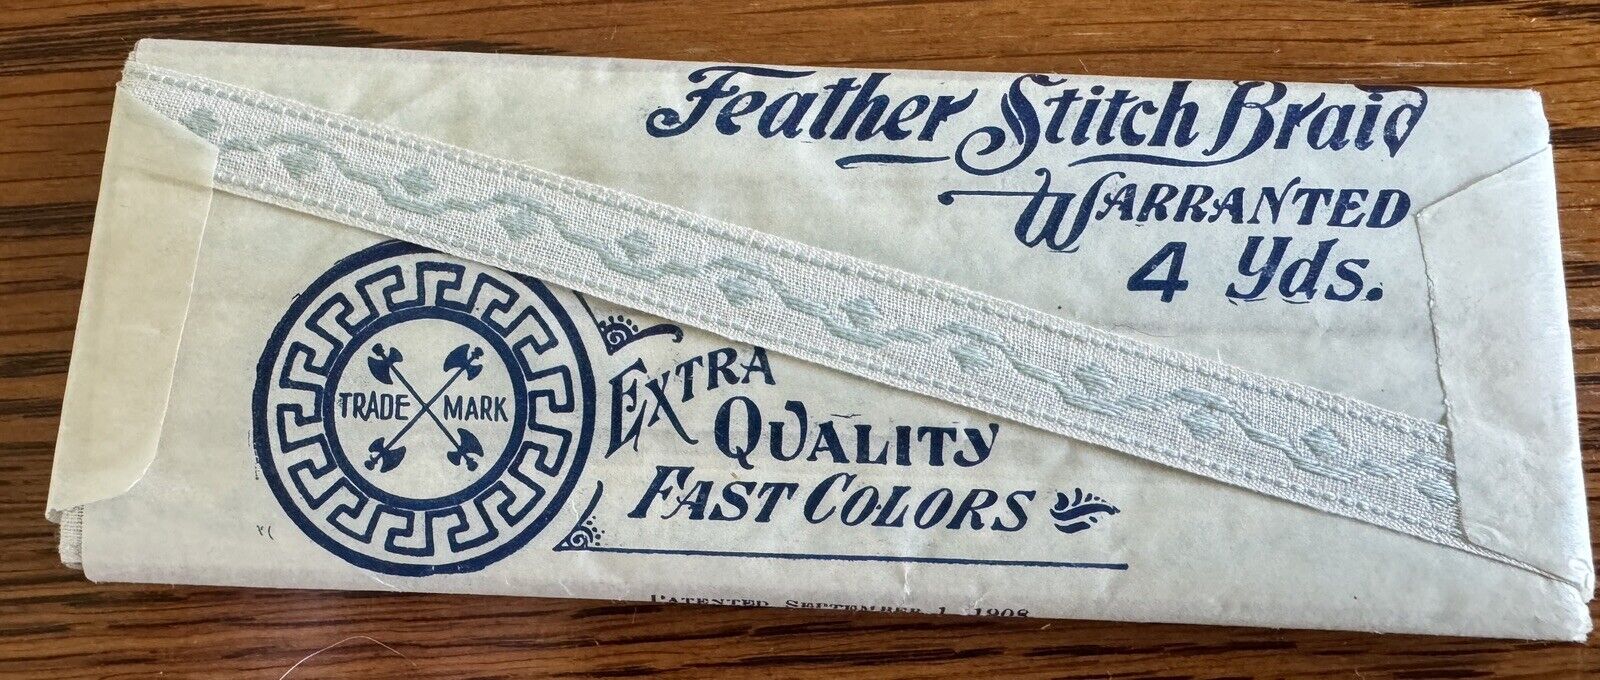 Antique Feather Stitch Braid Original Package Light Blue On White